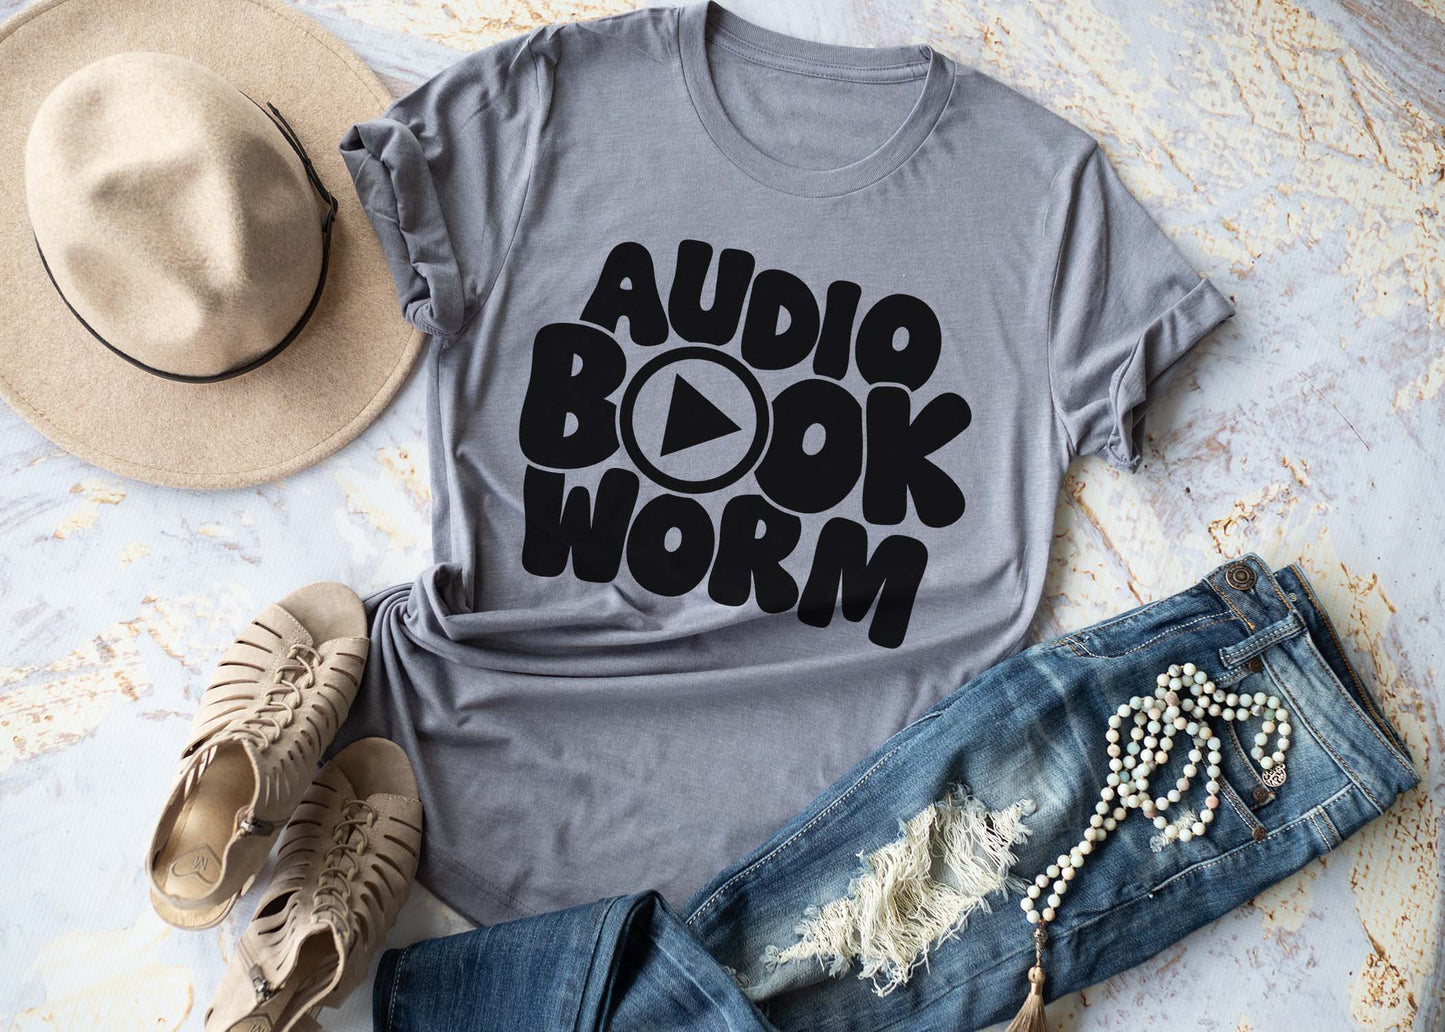 Audio book worm tee